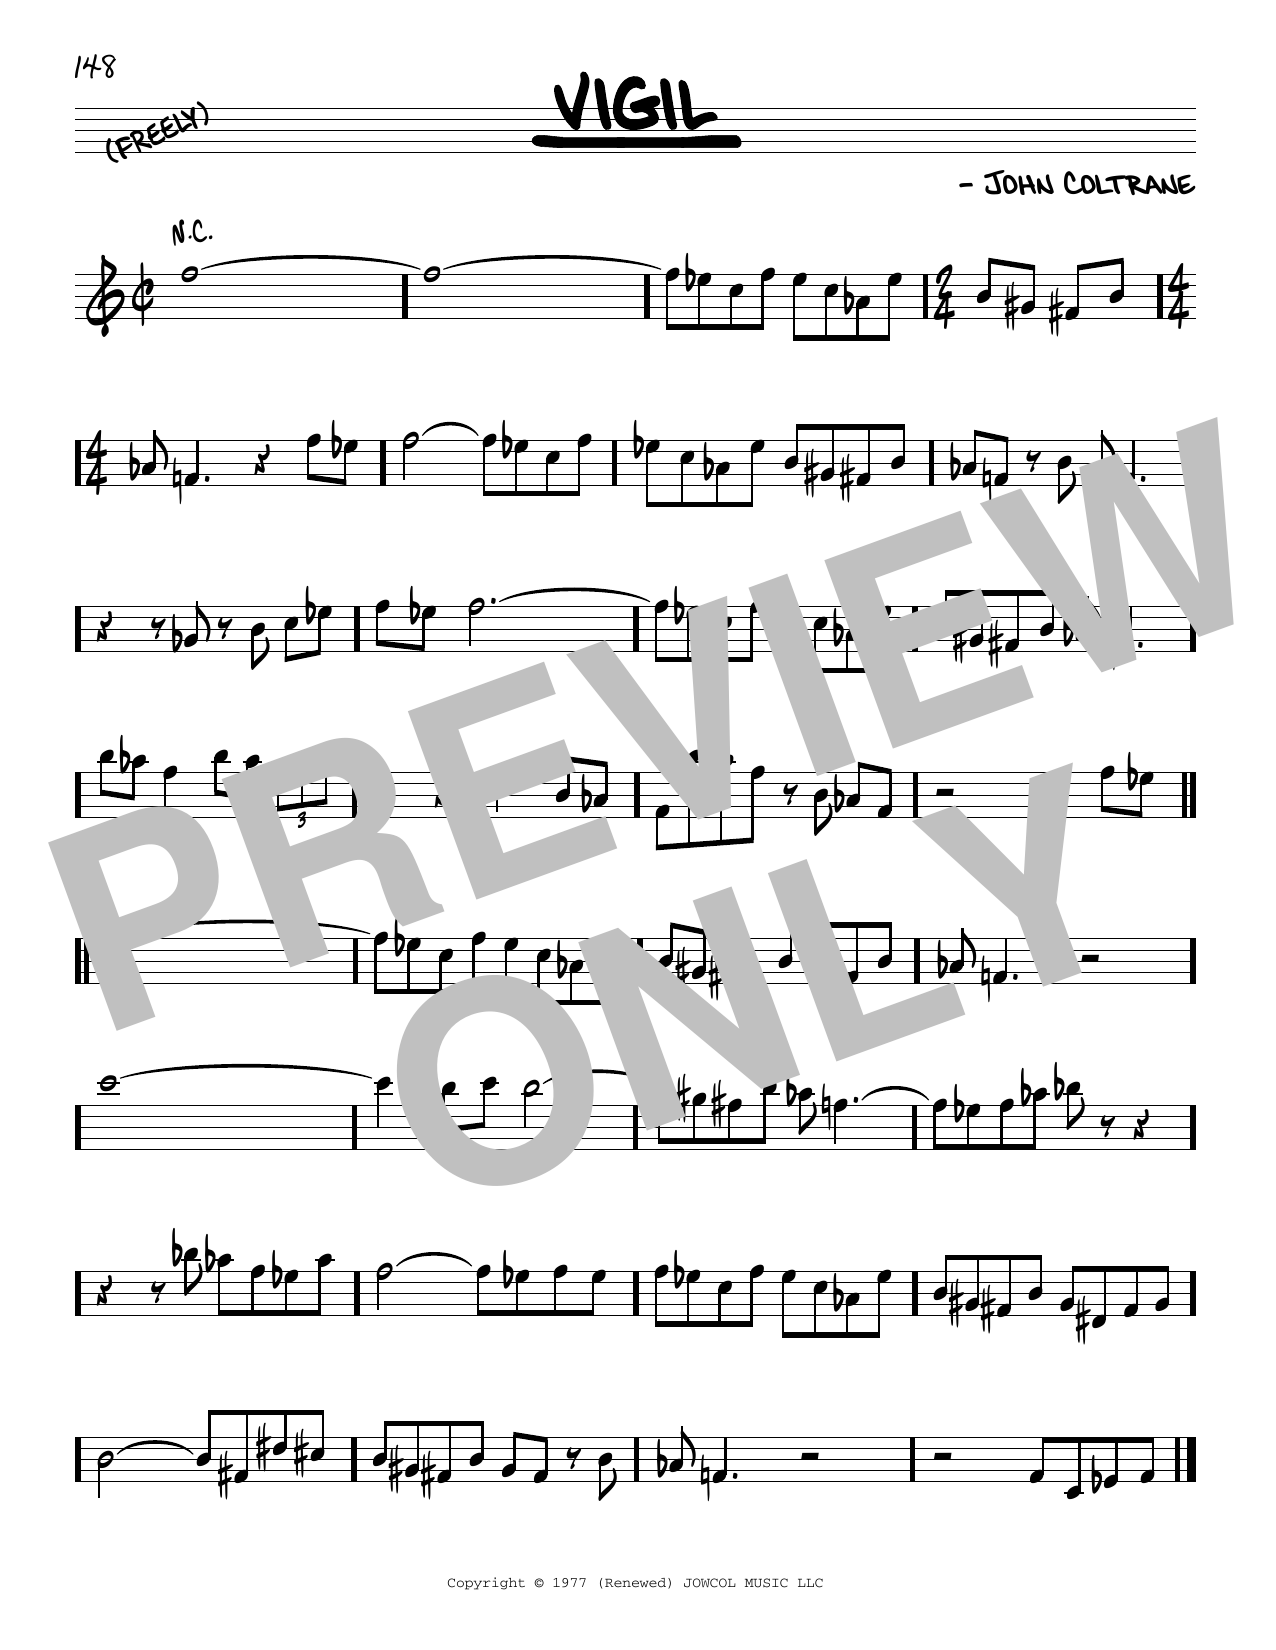 John Coltrane Vigil Sheet Music Notes & Chords for Real Book – Melody & Chords - Download or Print PDF